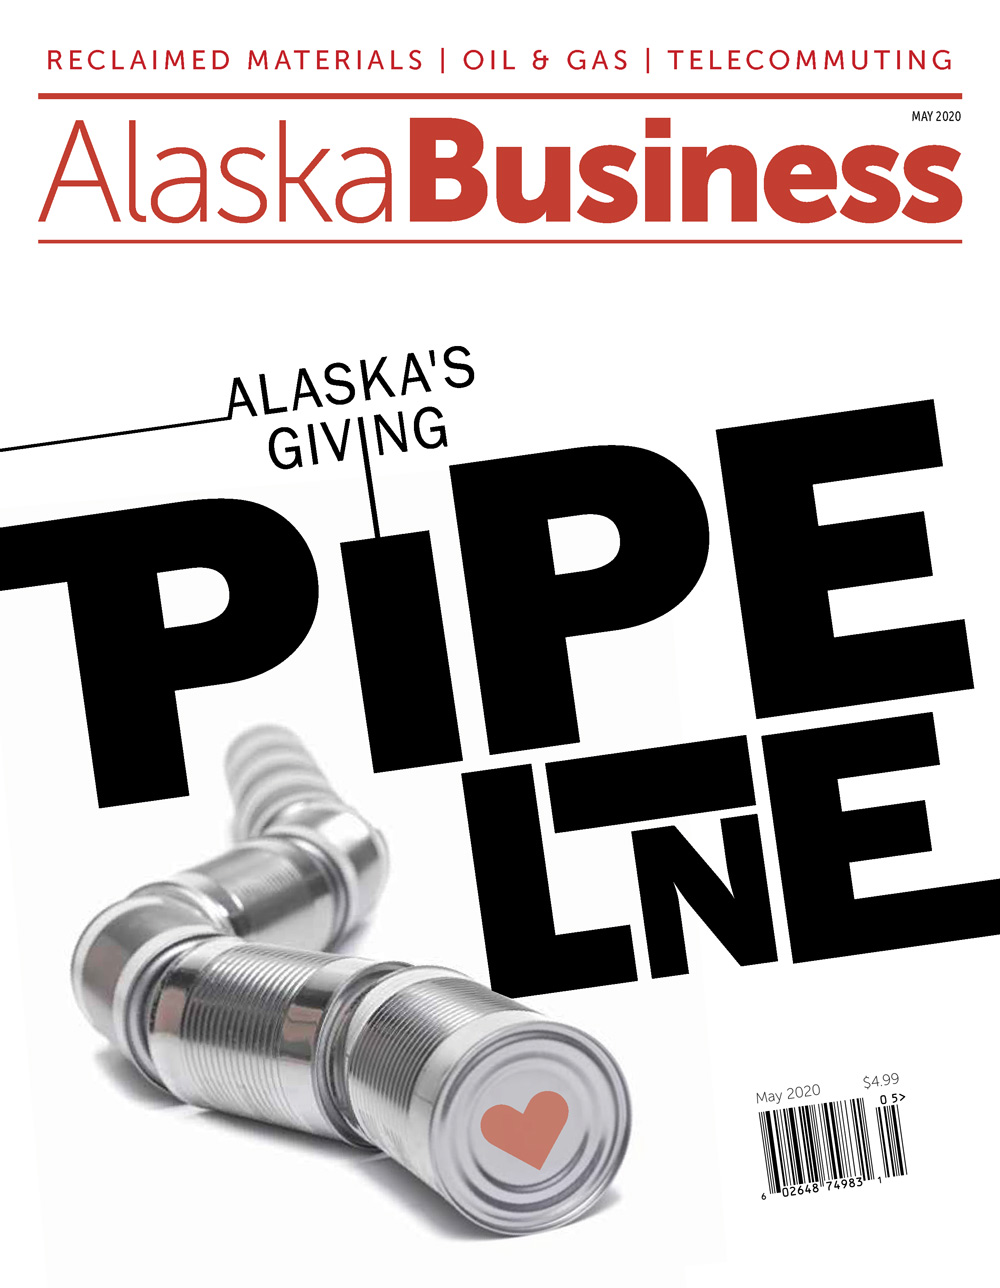 Alaska Business May 2020 cover